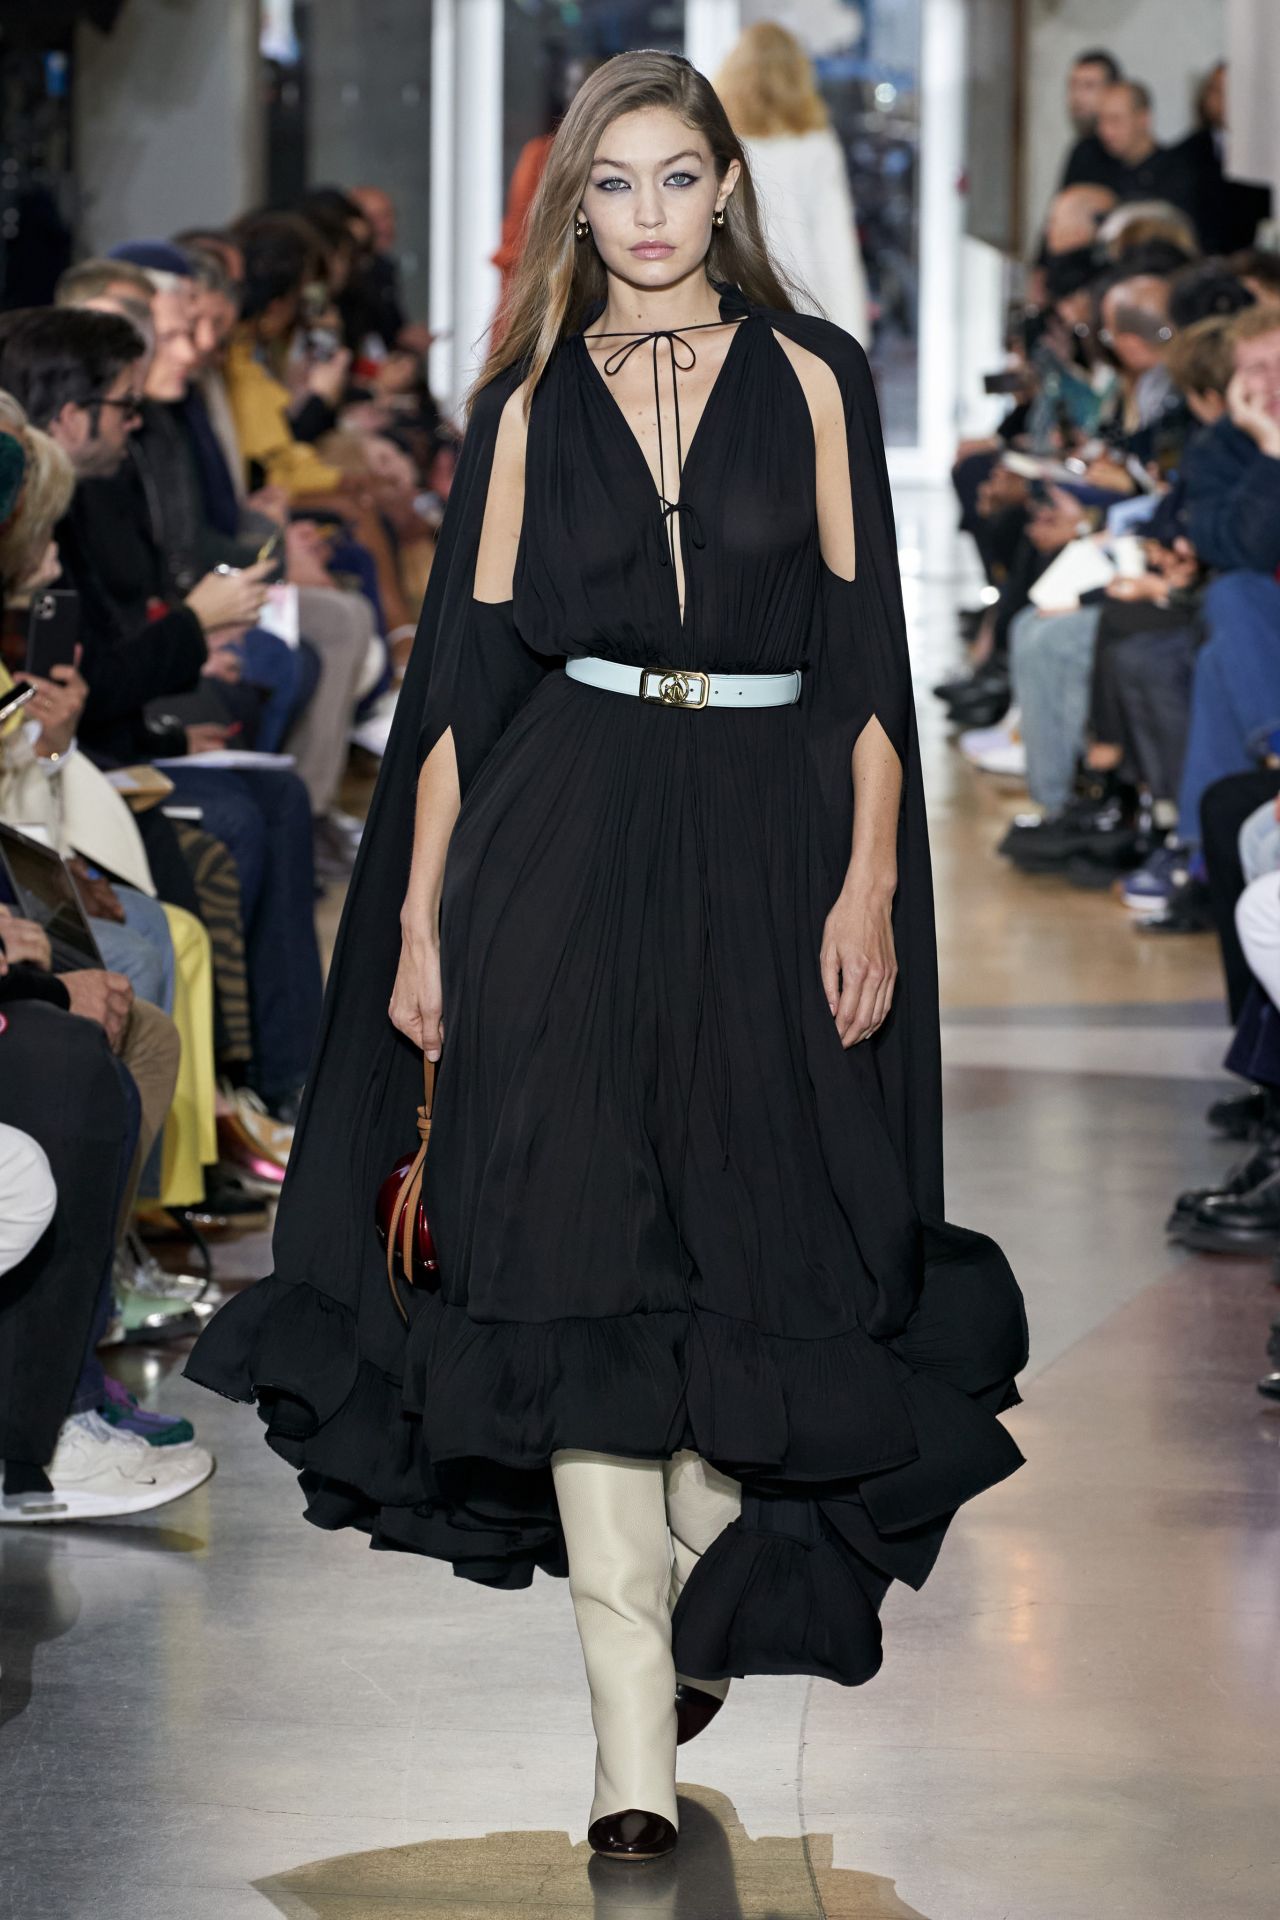 Gigi Hadid - Runway for Lanvin Menswear Show in Paris 01/19/2020 ...